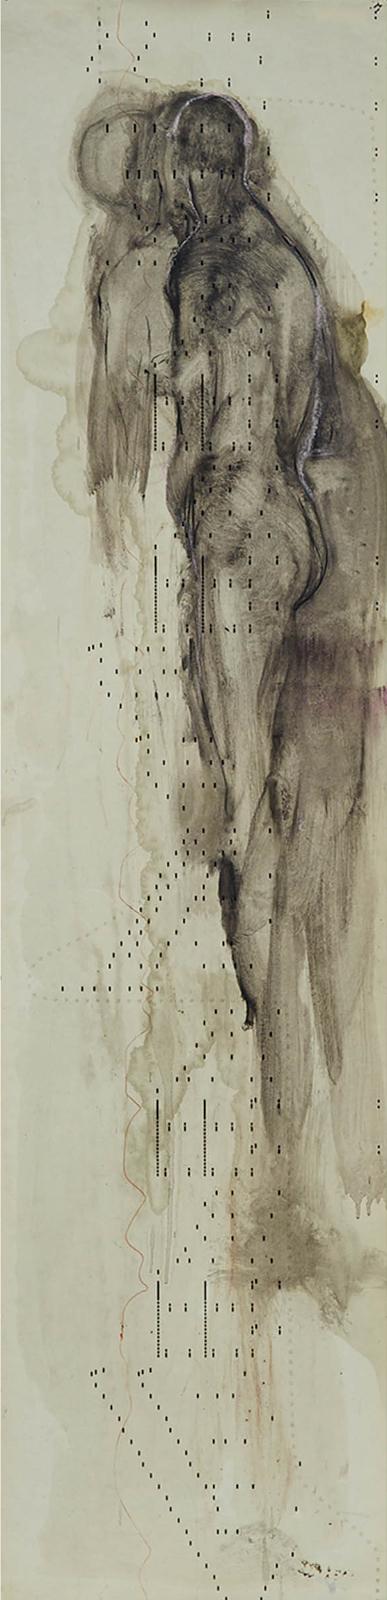 Angela Grossmann (1955) - Music Roll - Untitled Figure 1, 2001